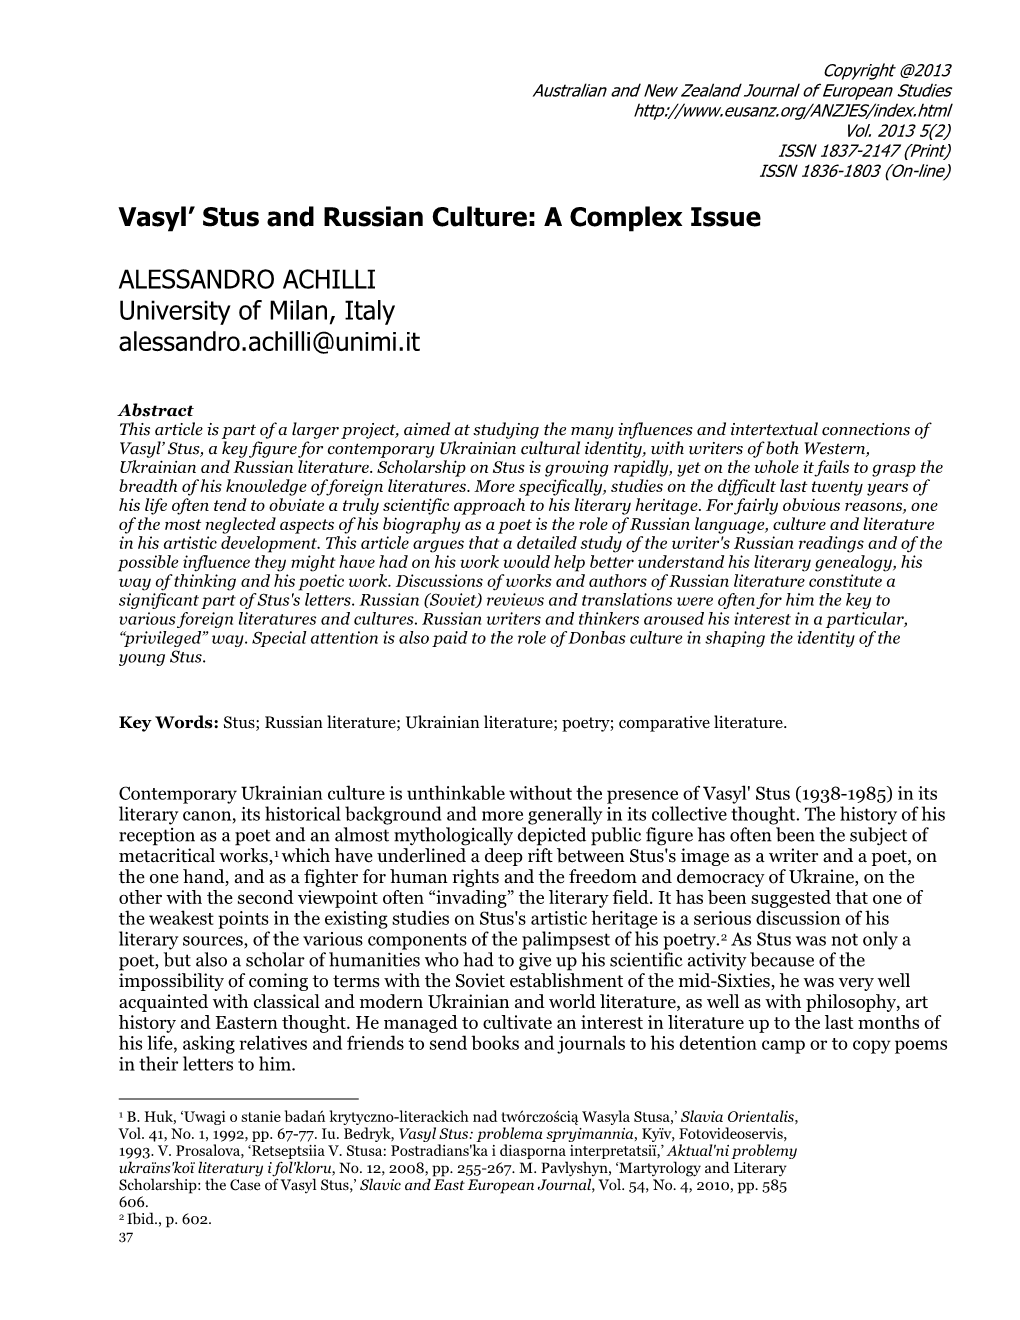 Vasyl' Stus and Russian Culture